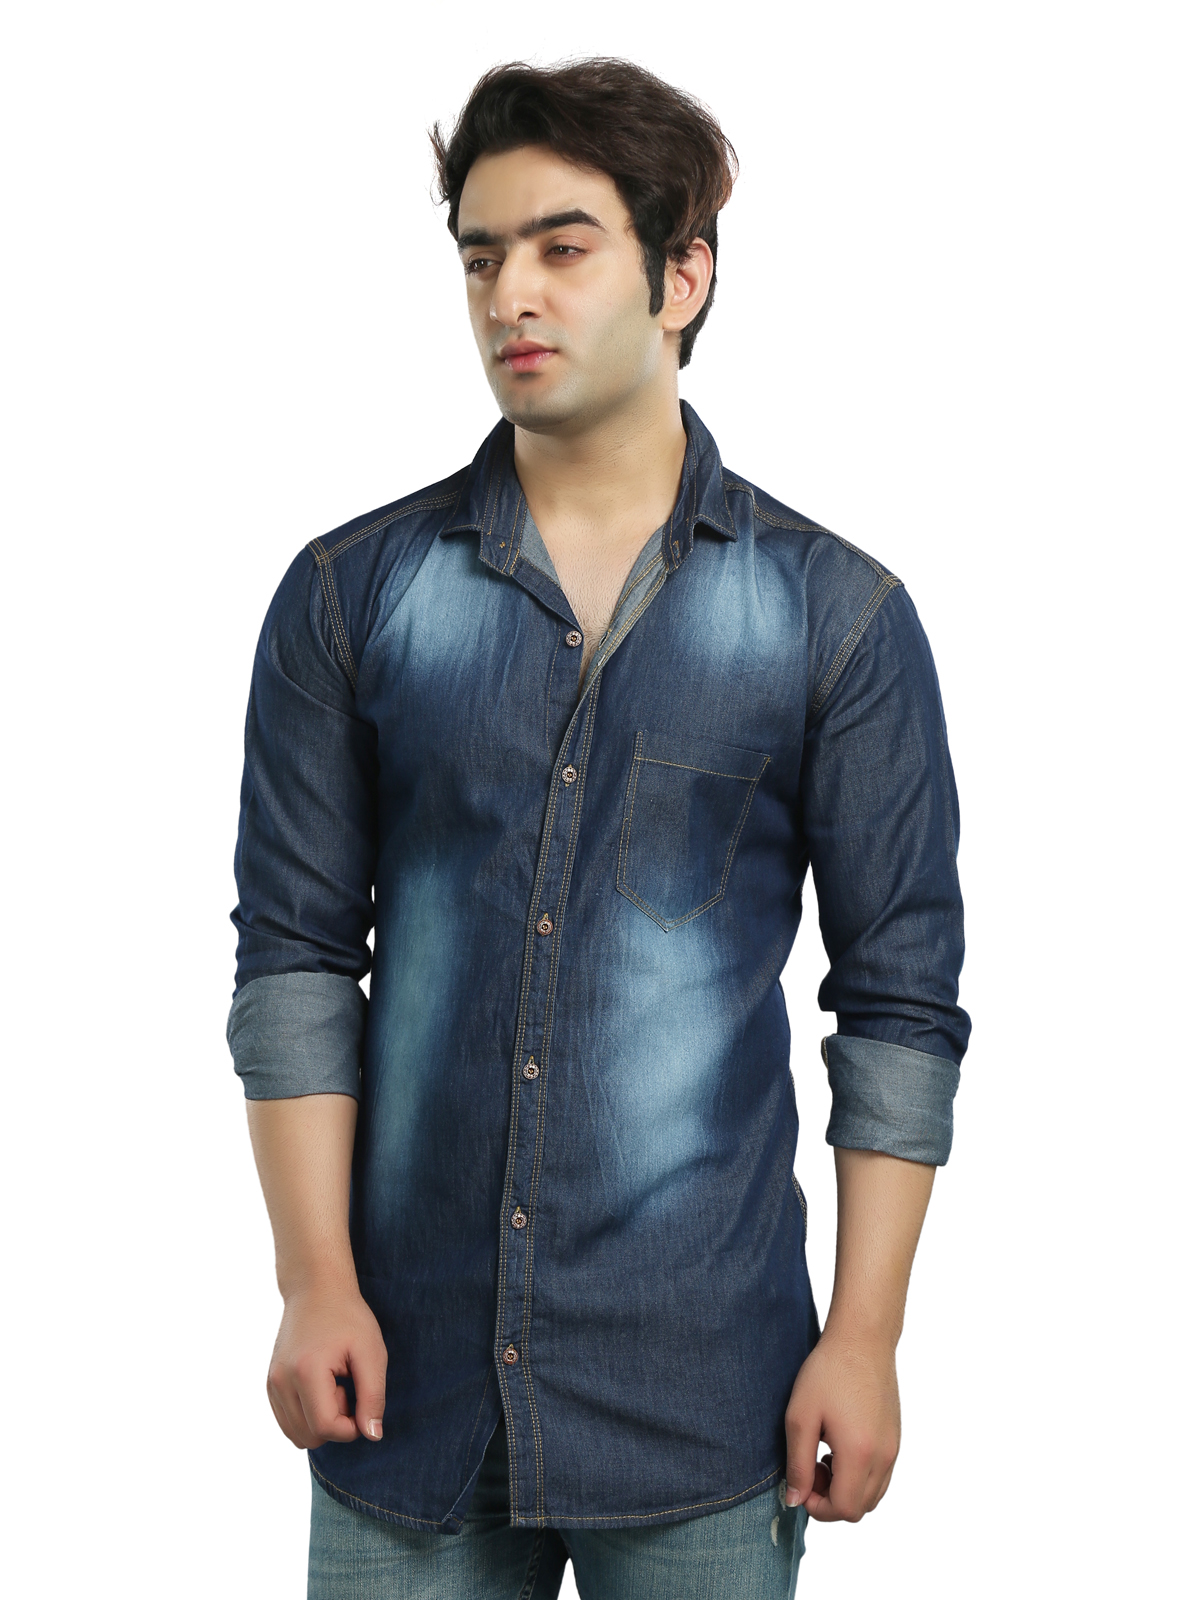 Kandy Men's Casual Denim Dark Blue Shirt